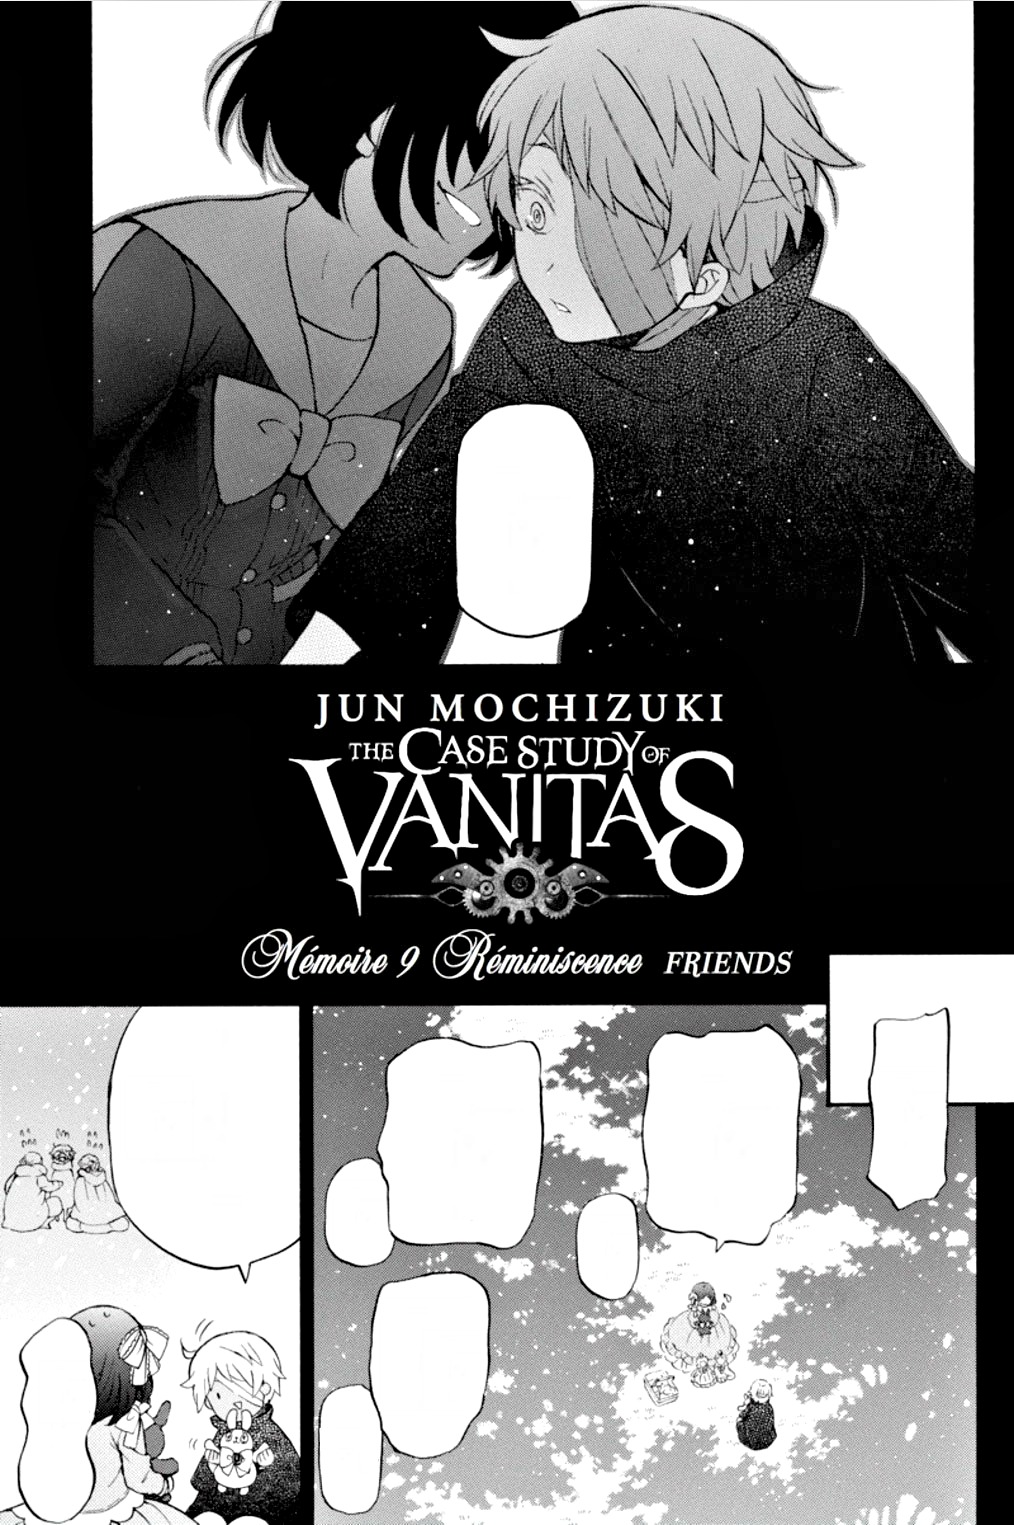 The Case Study of Vanitas ep.5 - The Sad Sade I drink and watch anime